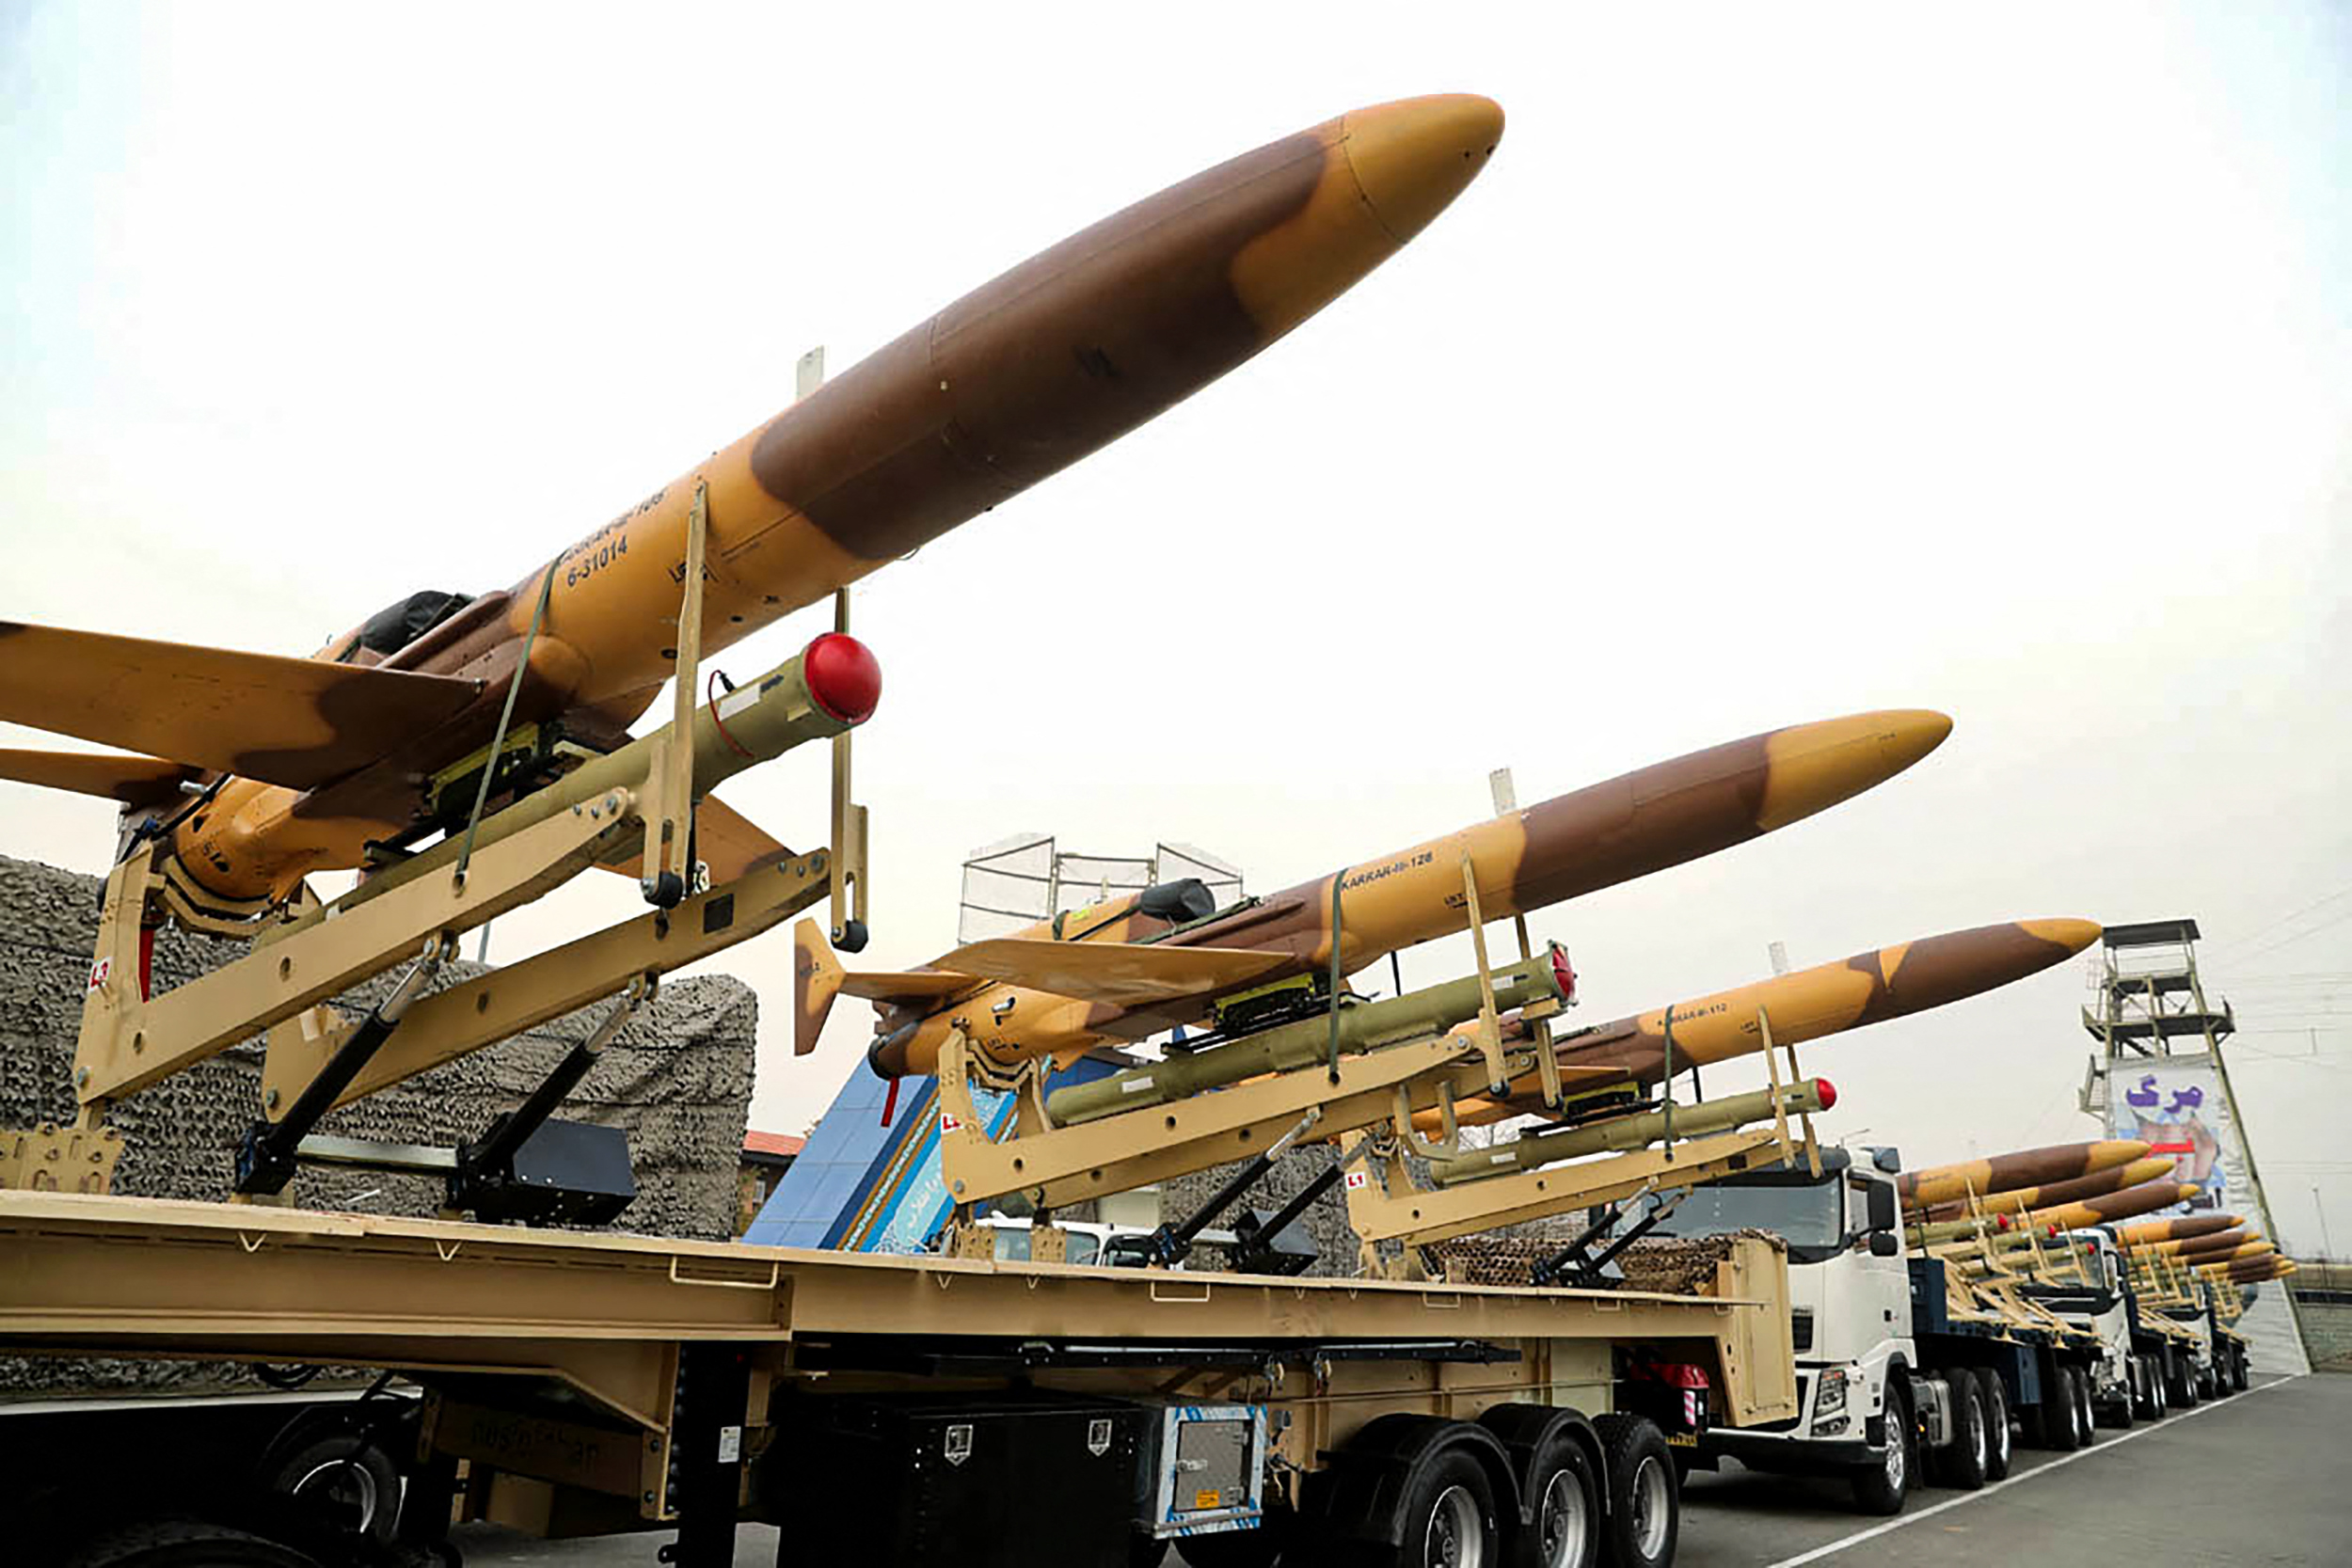 To Ισραήλ αναχαίτισε ιρανικά drones και πυραύλους και σχεδιάζει «σημαντική απάντηση»